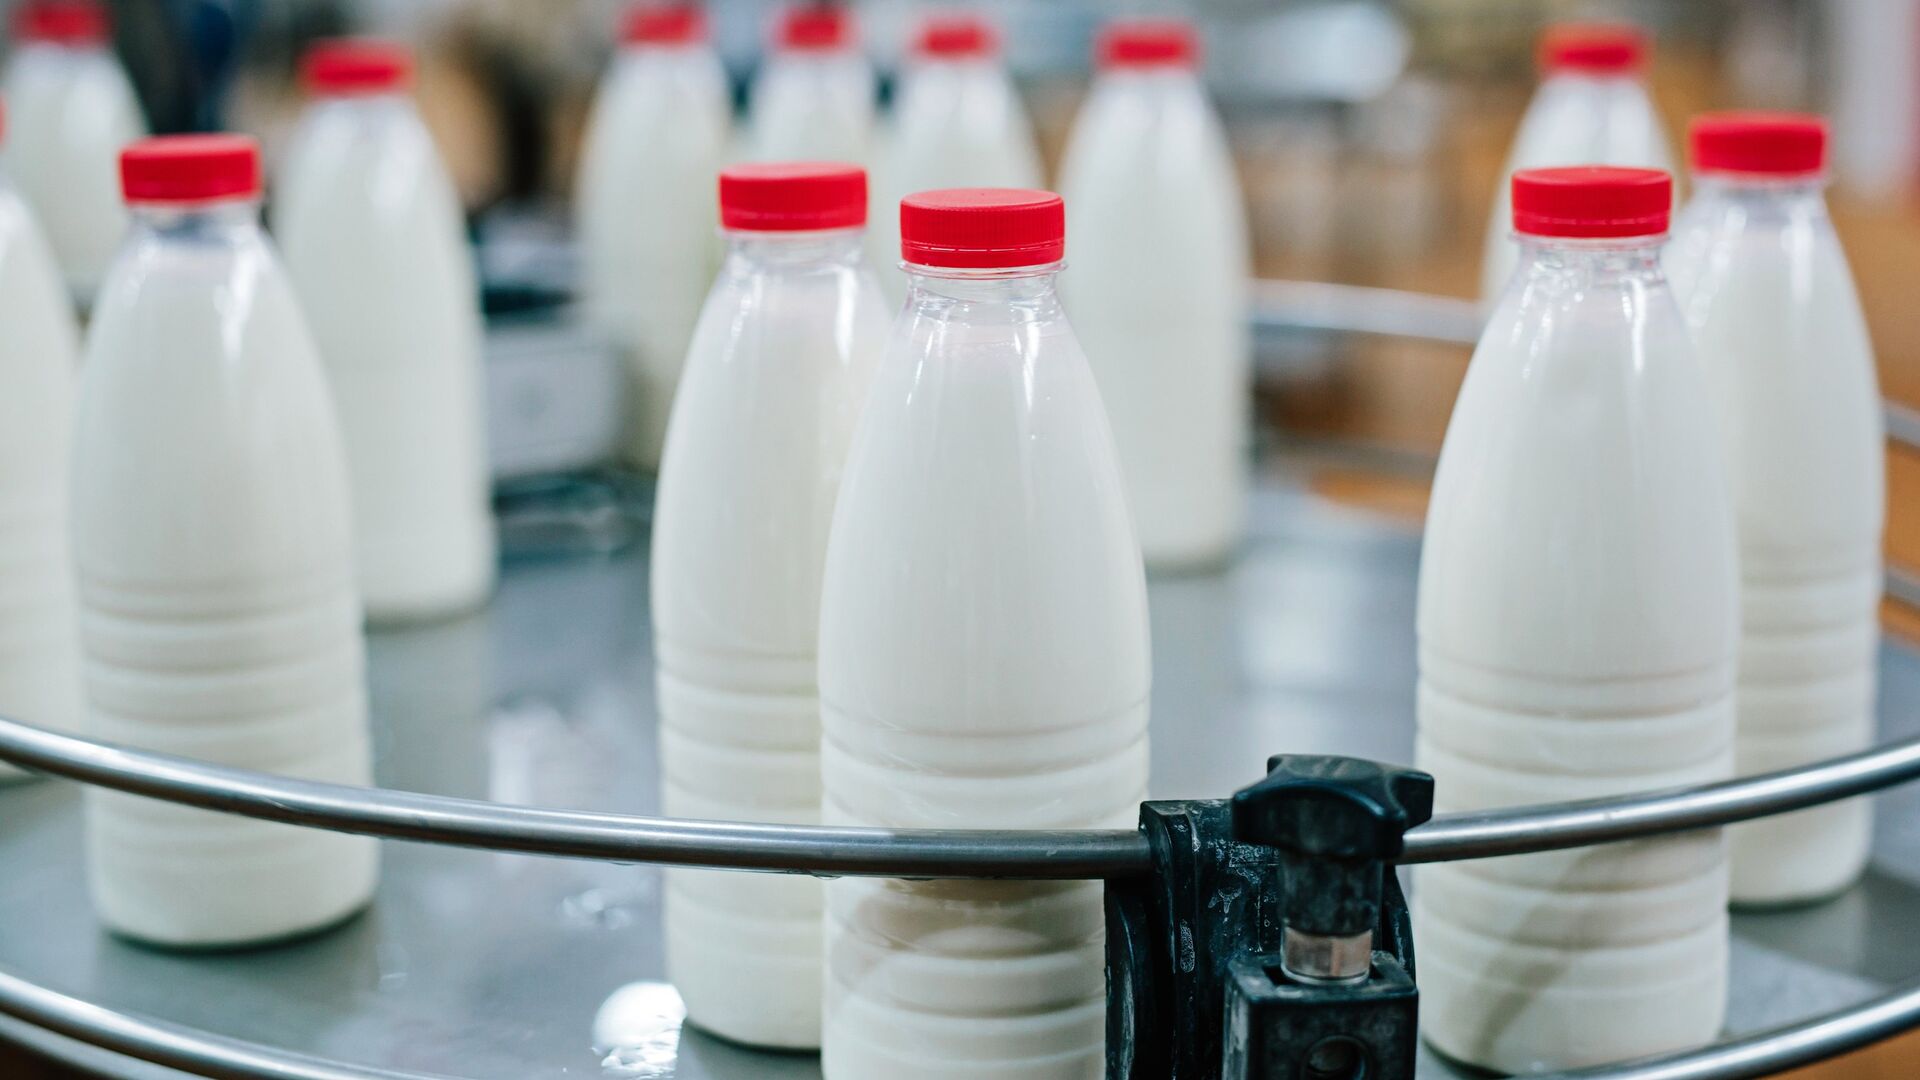 В Саратовской области произведено 100 000 тонн молока